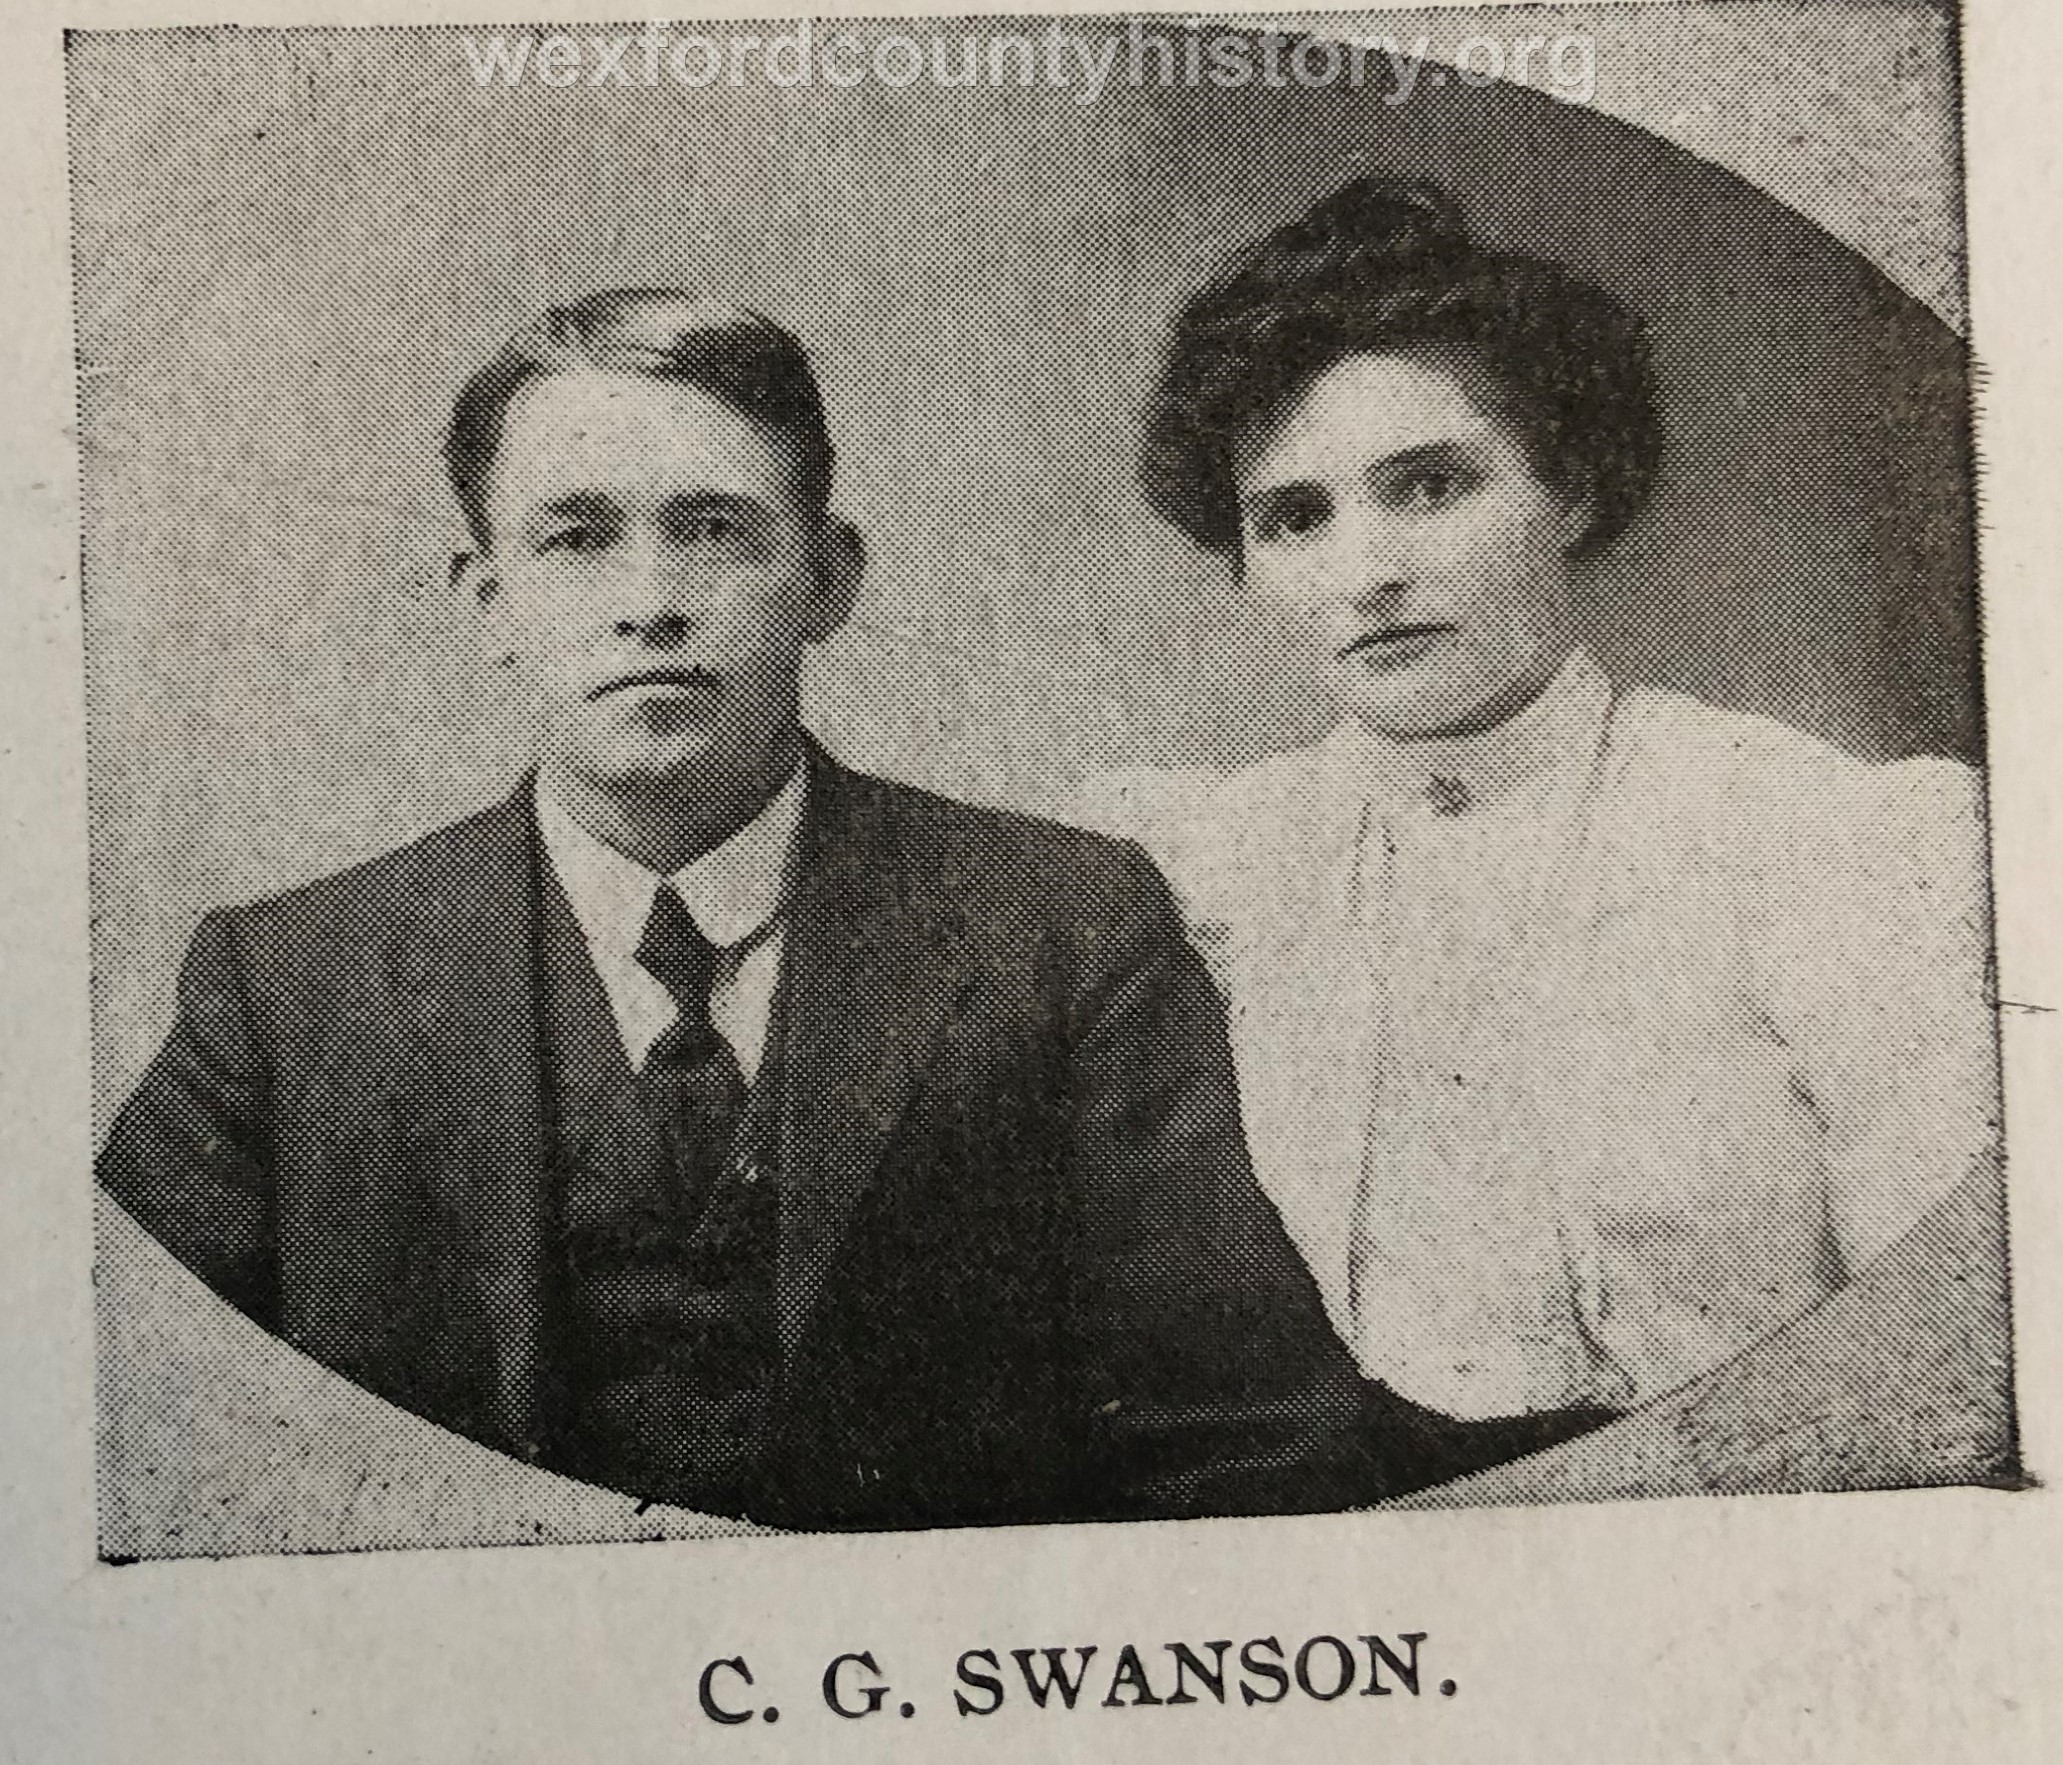 C. G. Swanson